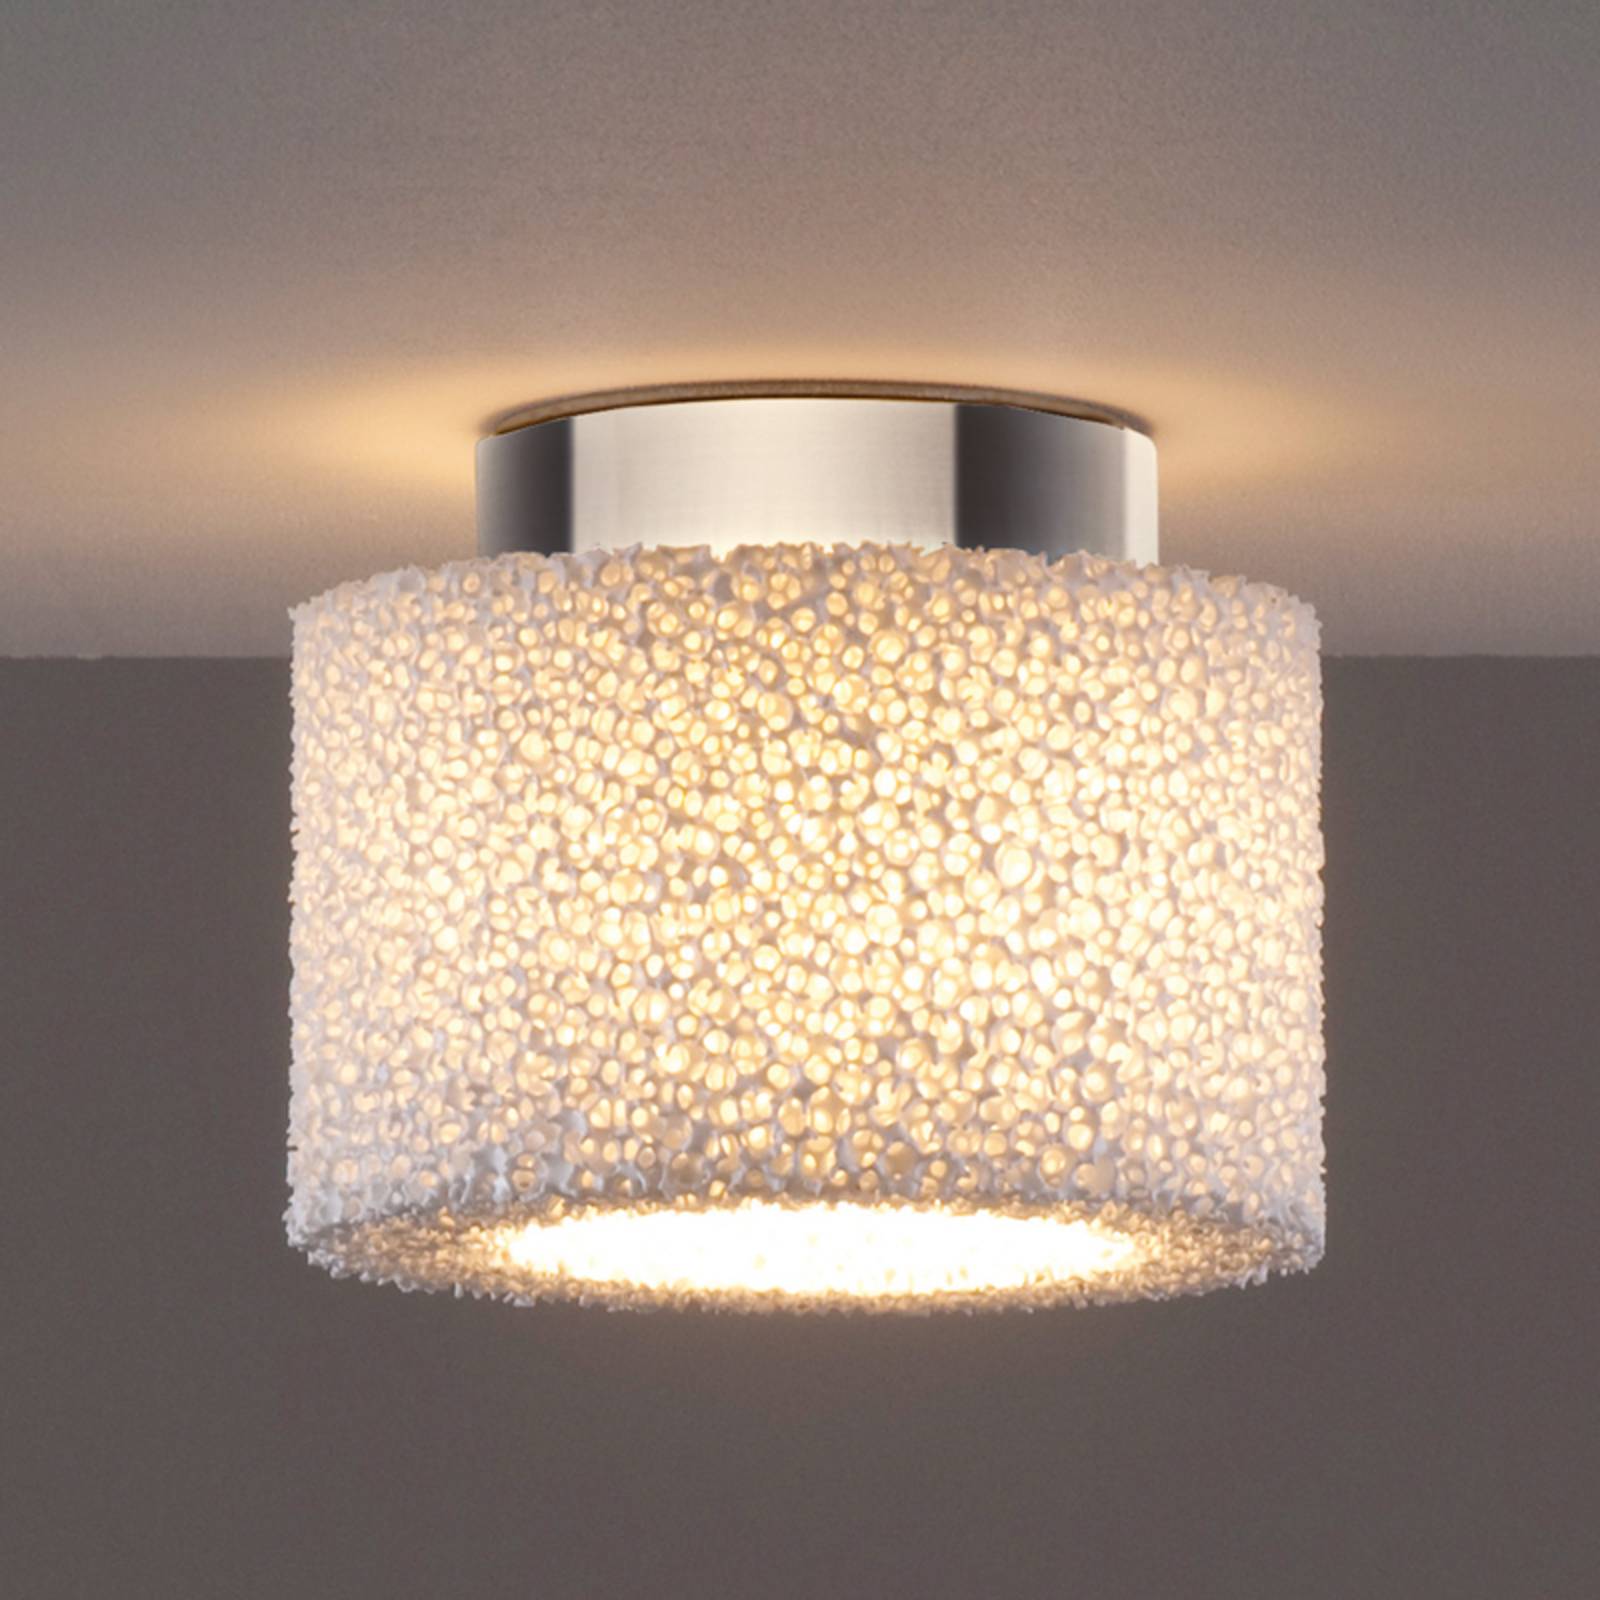 Reef - lampa sufitowa LED z ceramiki piankowej